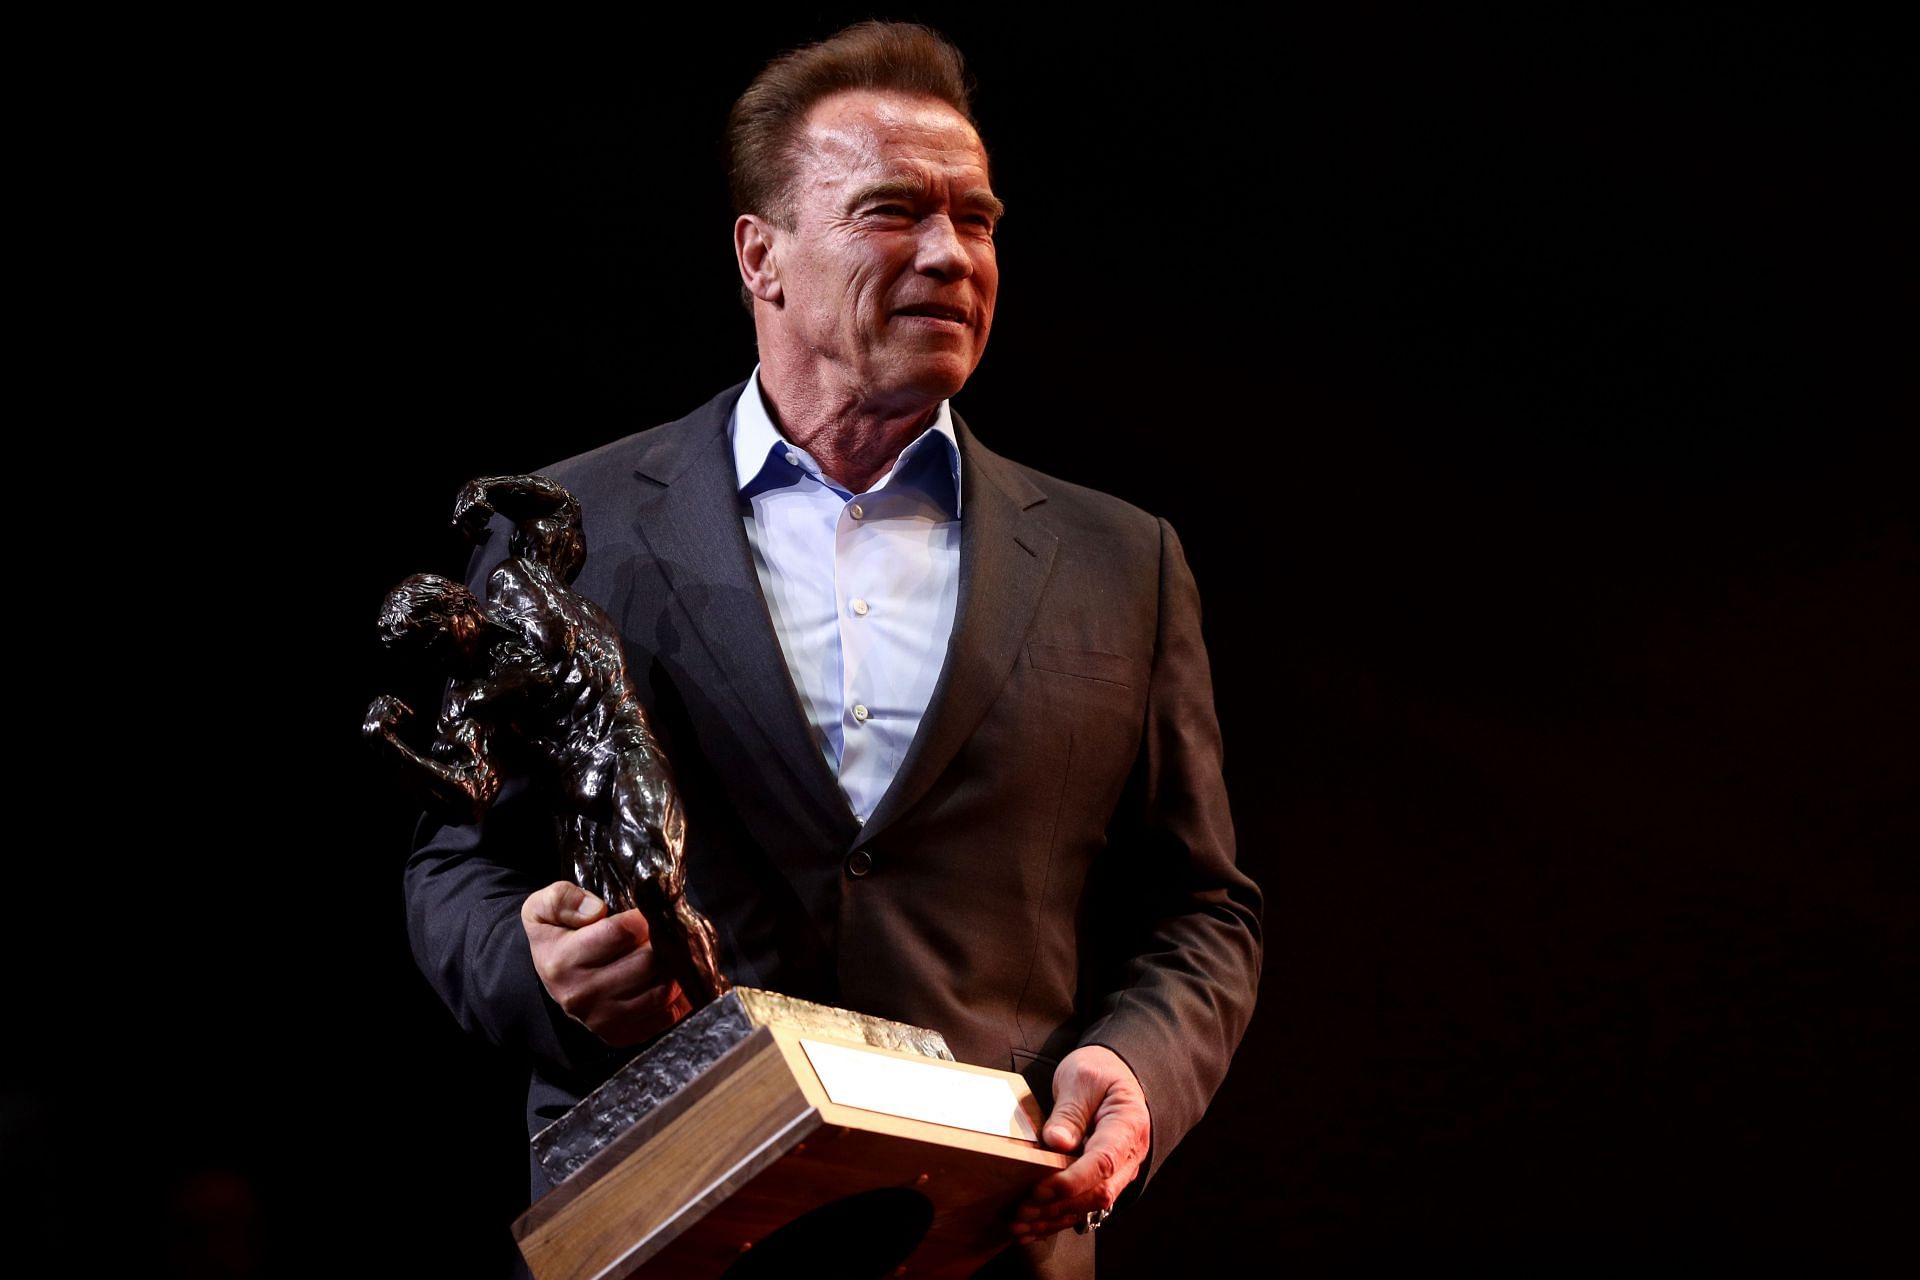 Arnold Schwarzenegger at the Arnold Sports Festival 2017 (Image via Getty)